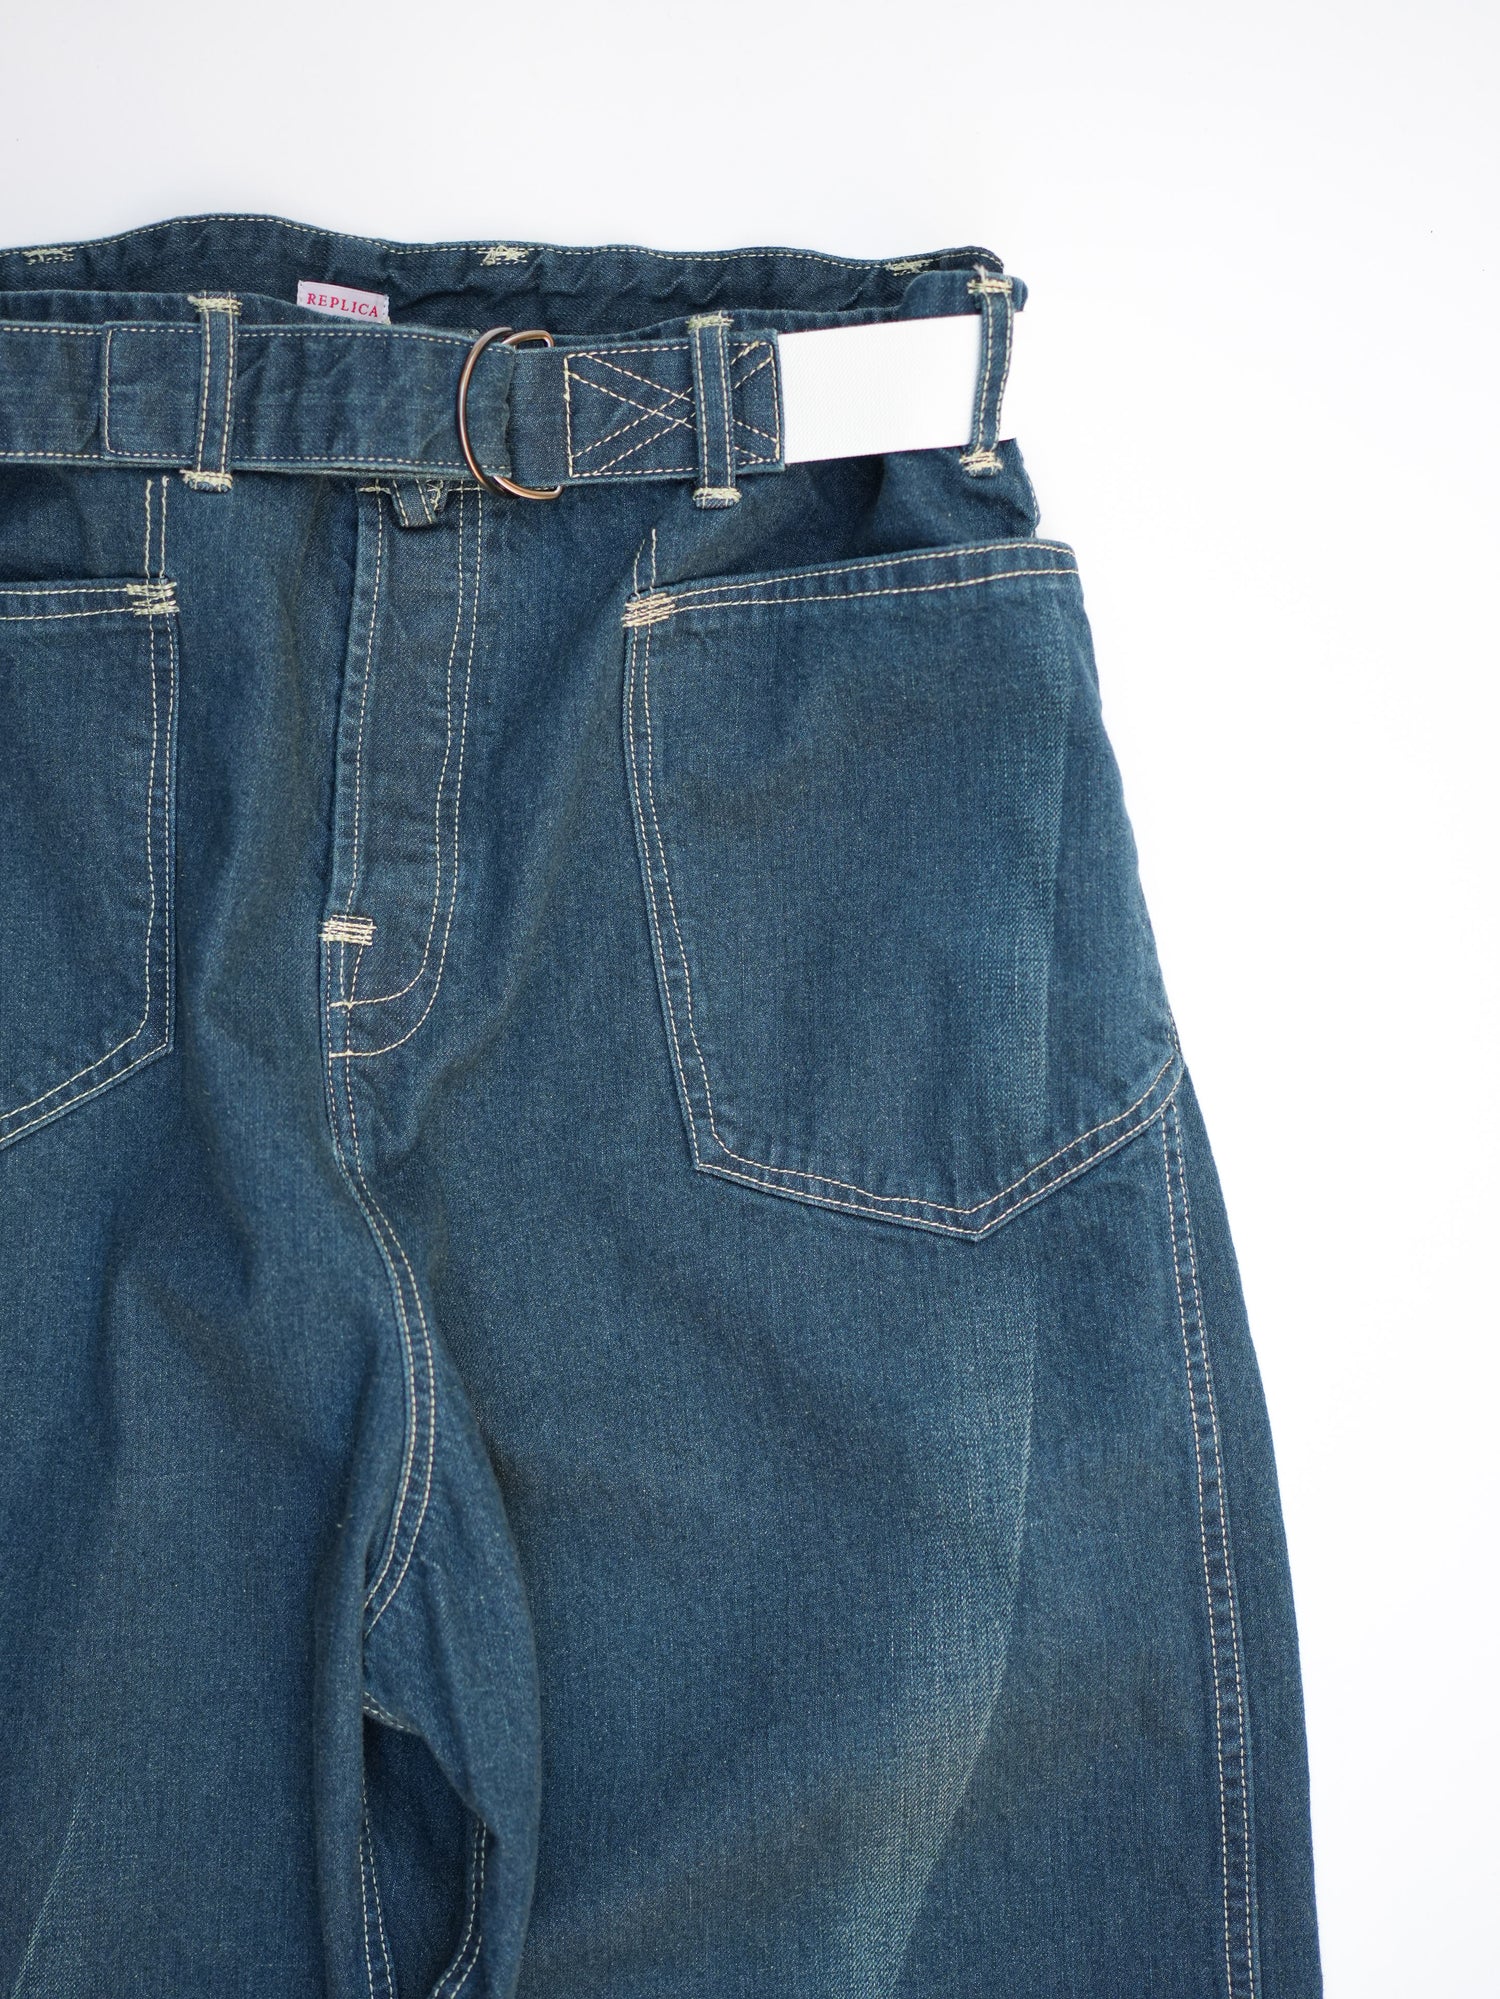 【DAN】Replica Jeans - Strapped12オンス岡山デニム